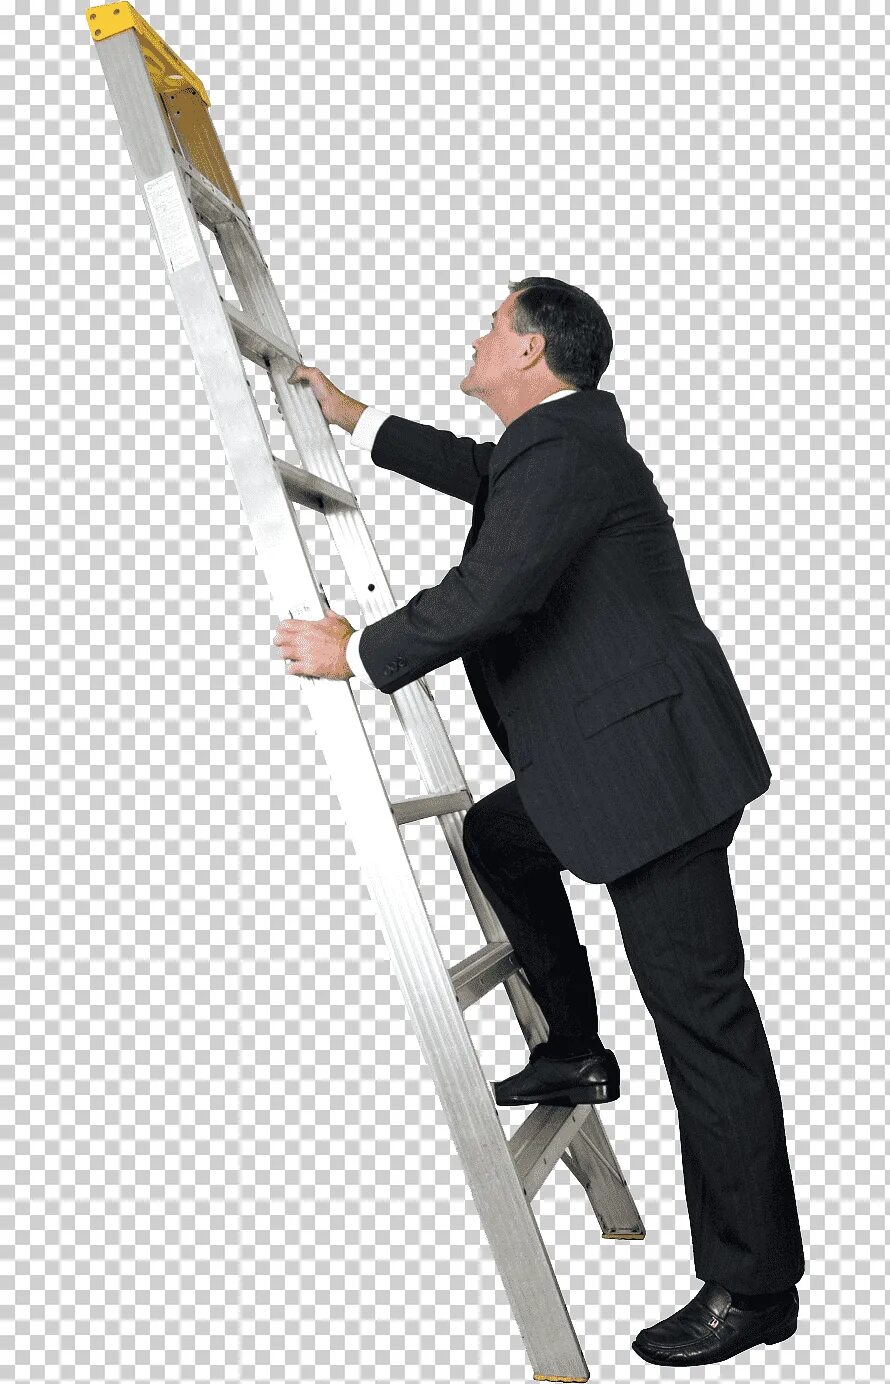 Мужчина поднимается по лестнице. Человек на лестнице. Человек карабкается по лестнице. Человек на стремянке. Человек на лестнице стремянке.